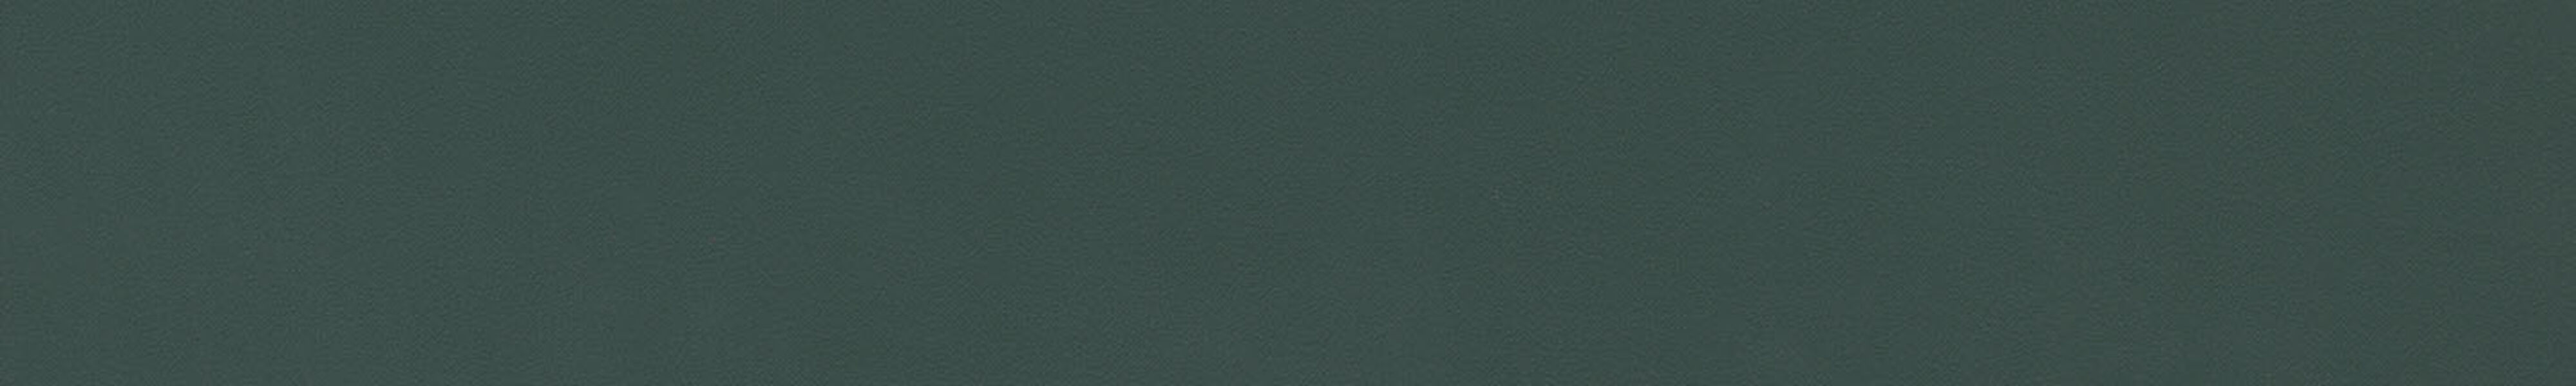 skai<sup>®</sup> colore classico ULTRA forest       0,35 1440